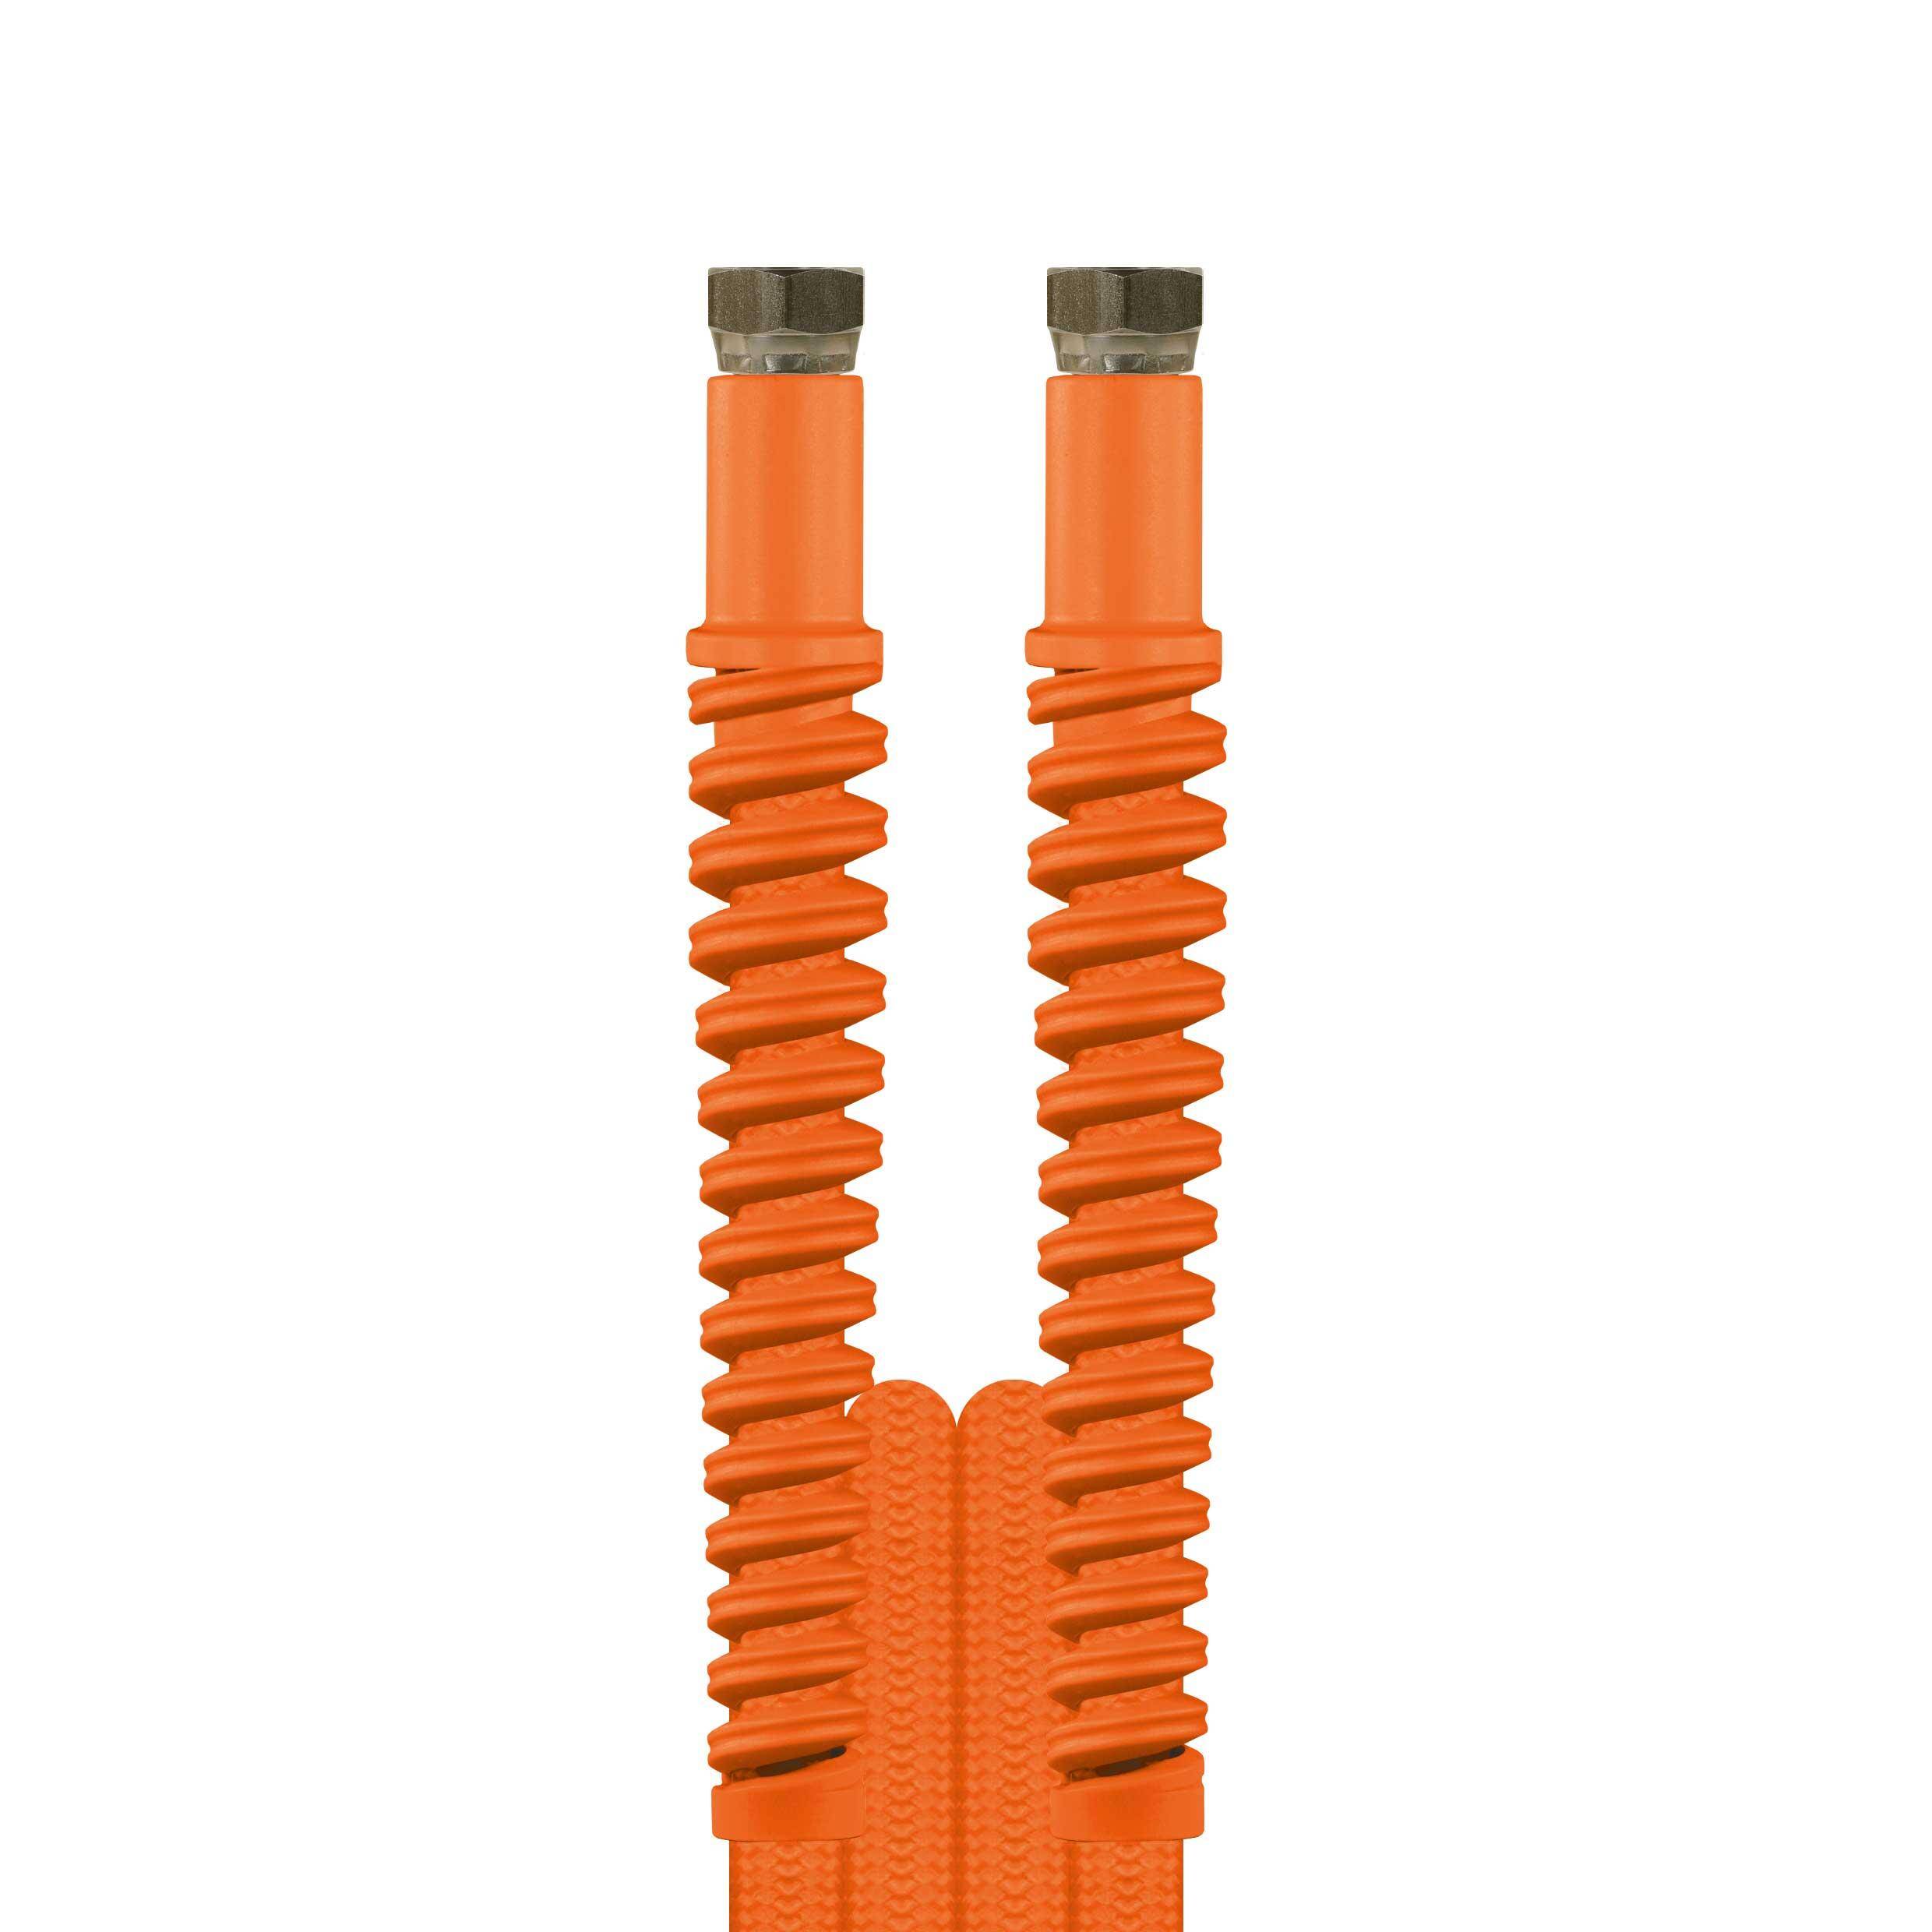 Wąż CARWASH-COMFORT orange 4,7 mb okuty